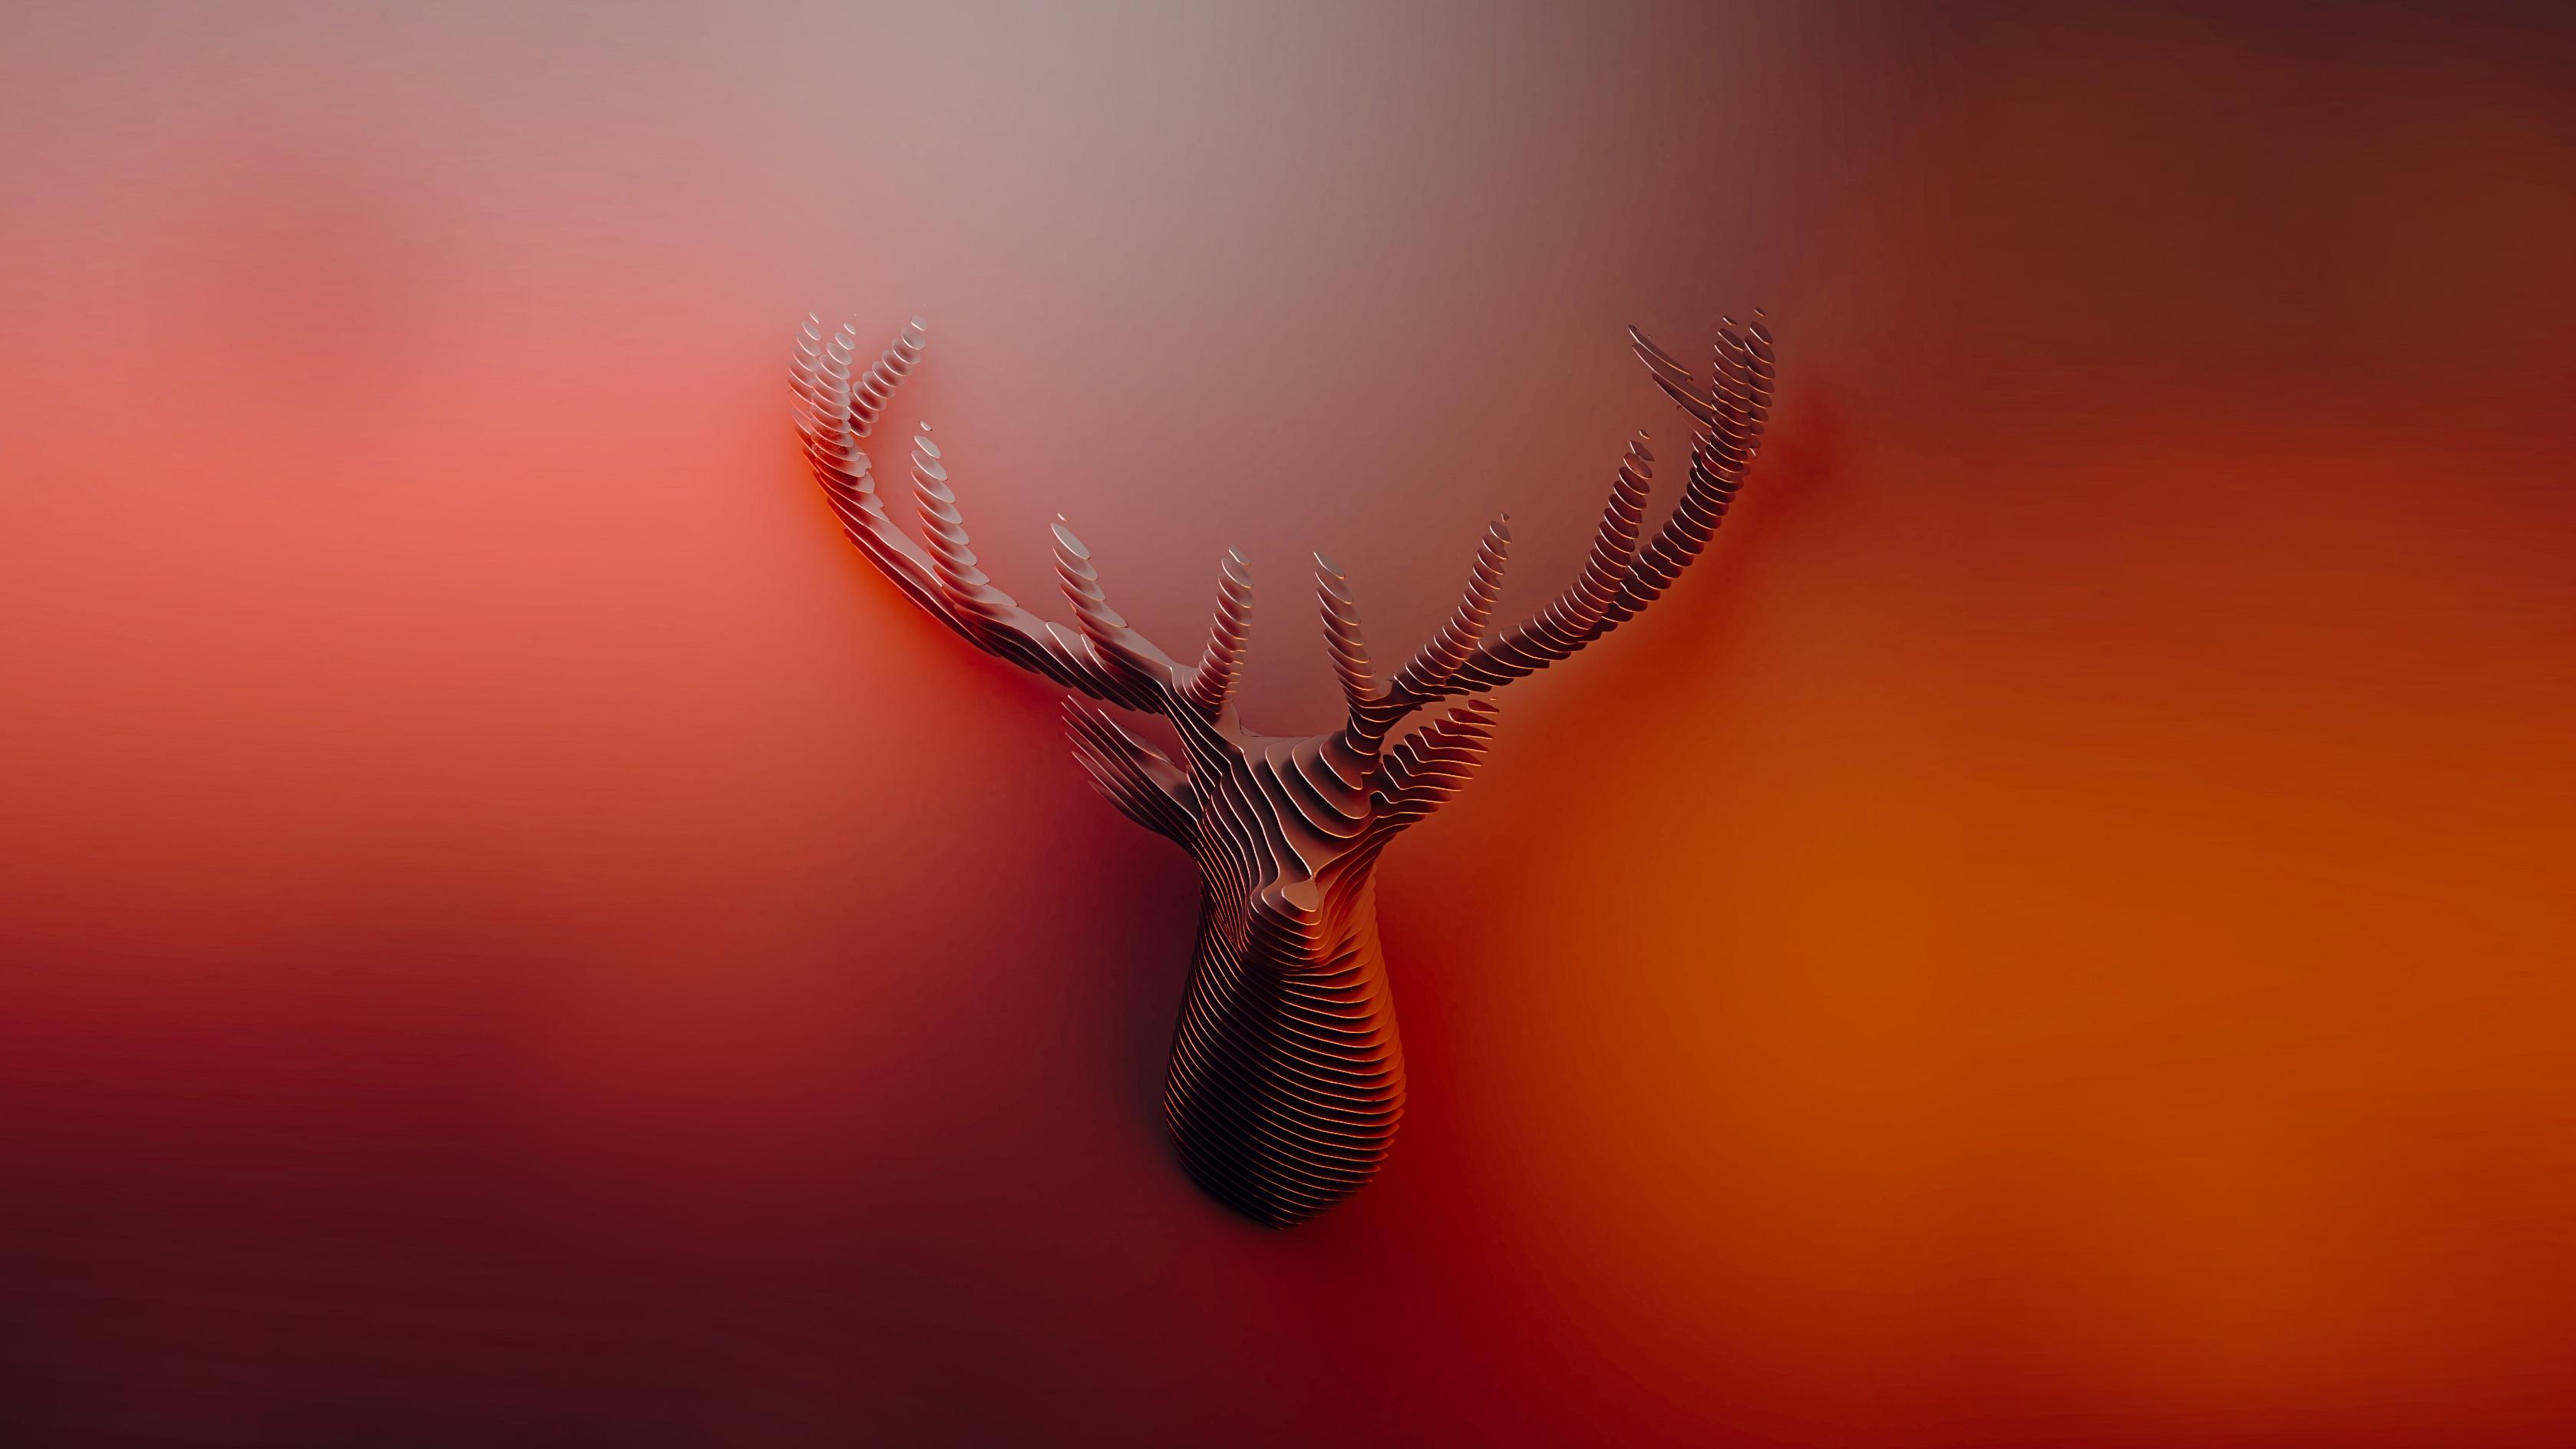 Wallpapers digital art deer artwork on the desktop